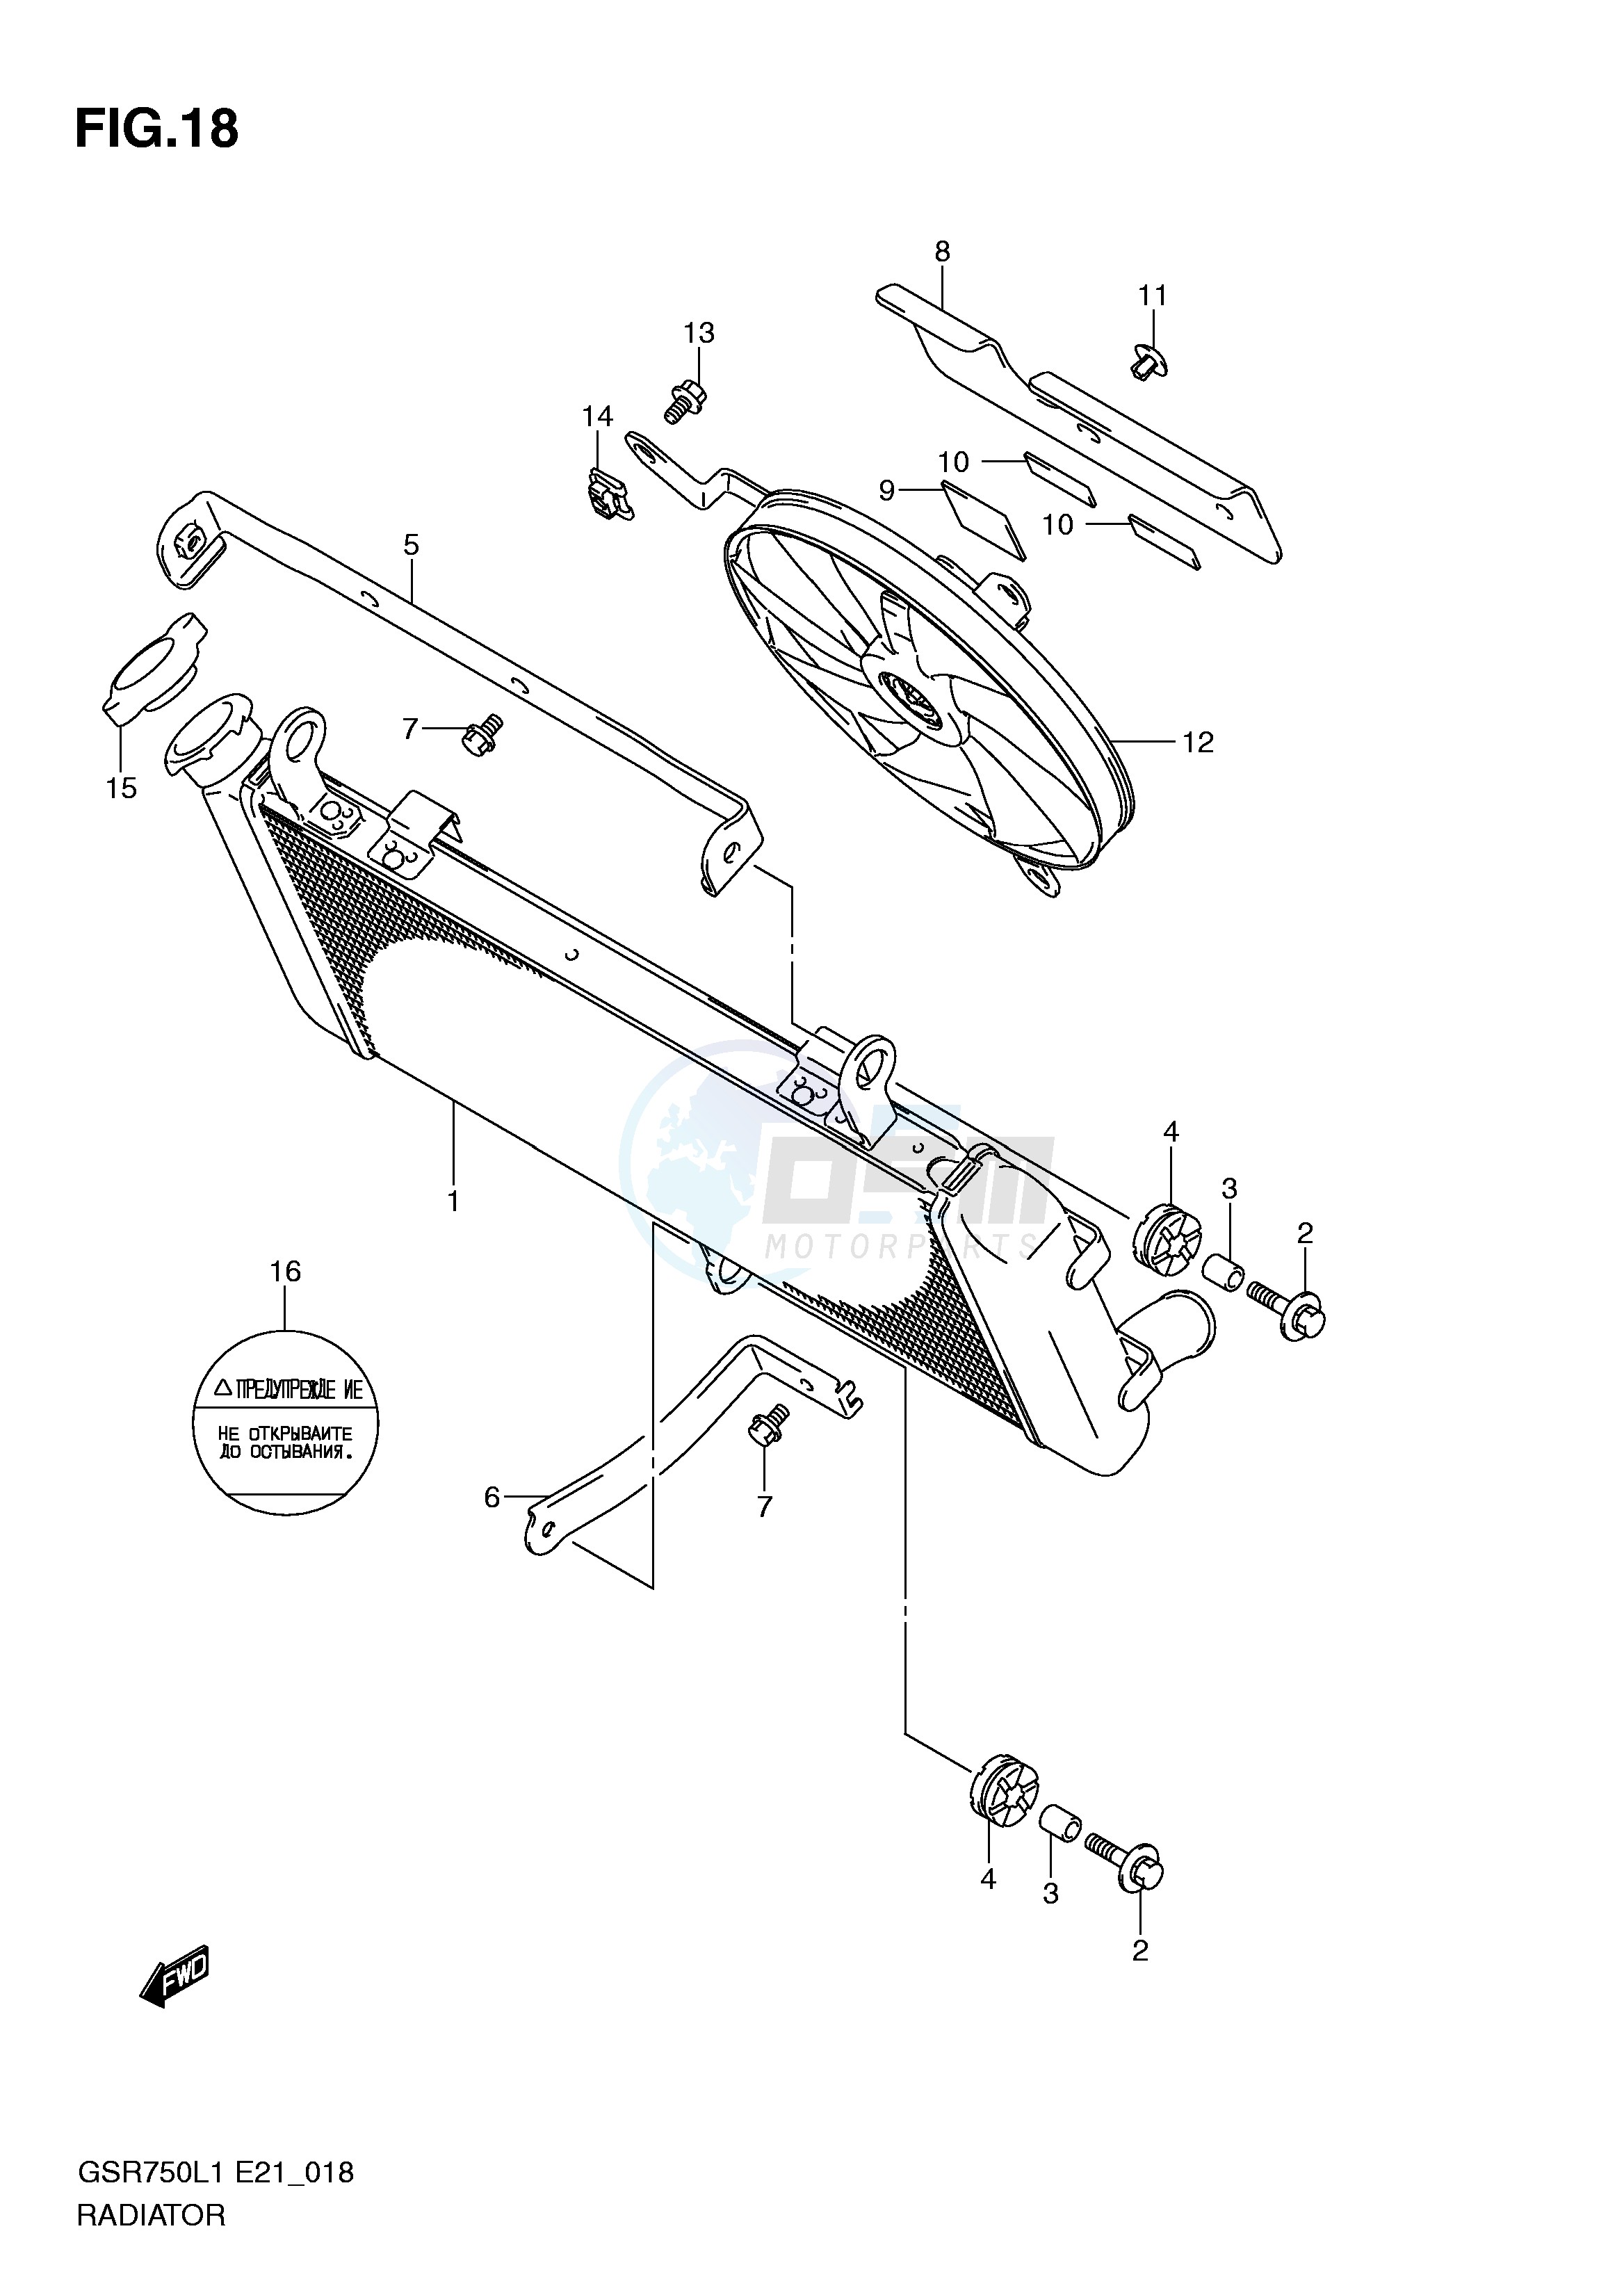 RADIATOR (GSR750L1 E21) blueprint